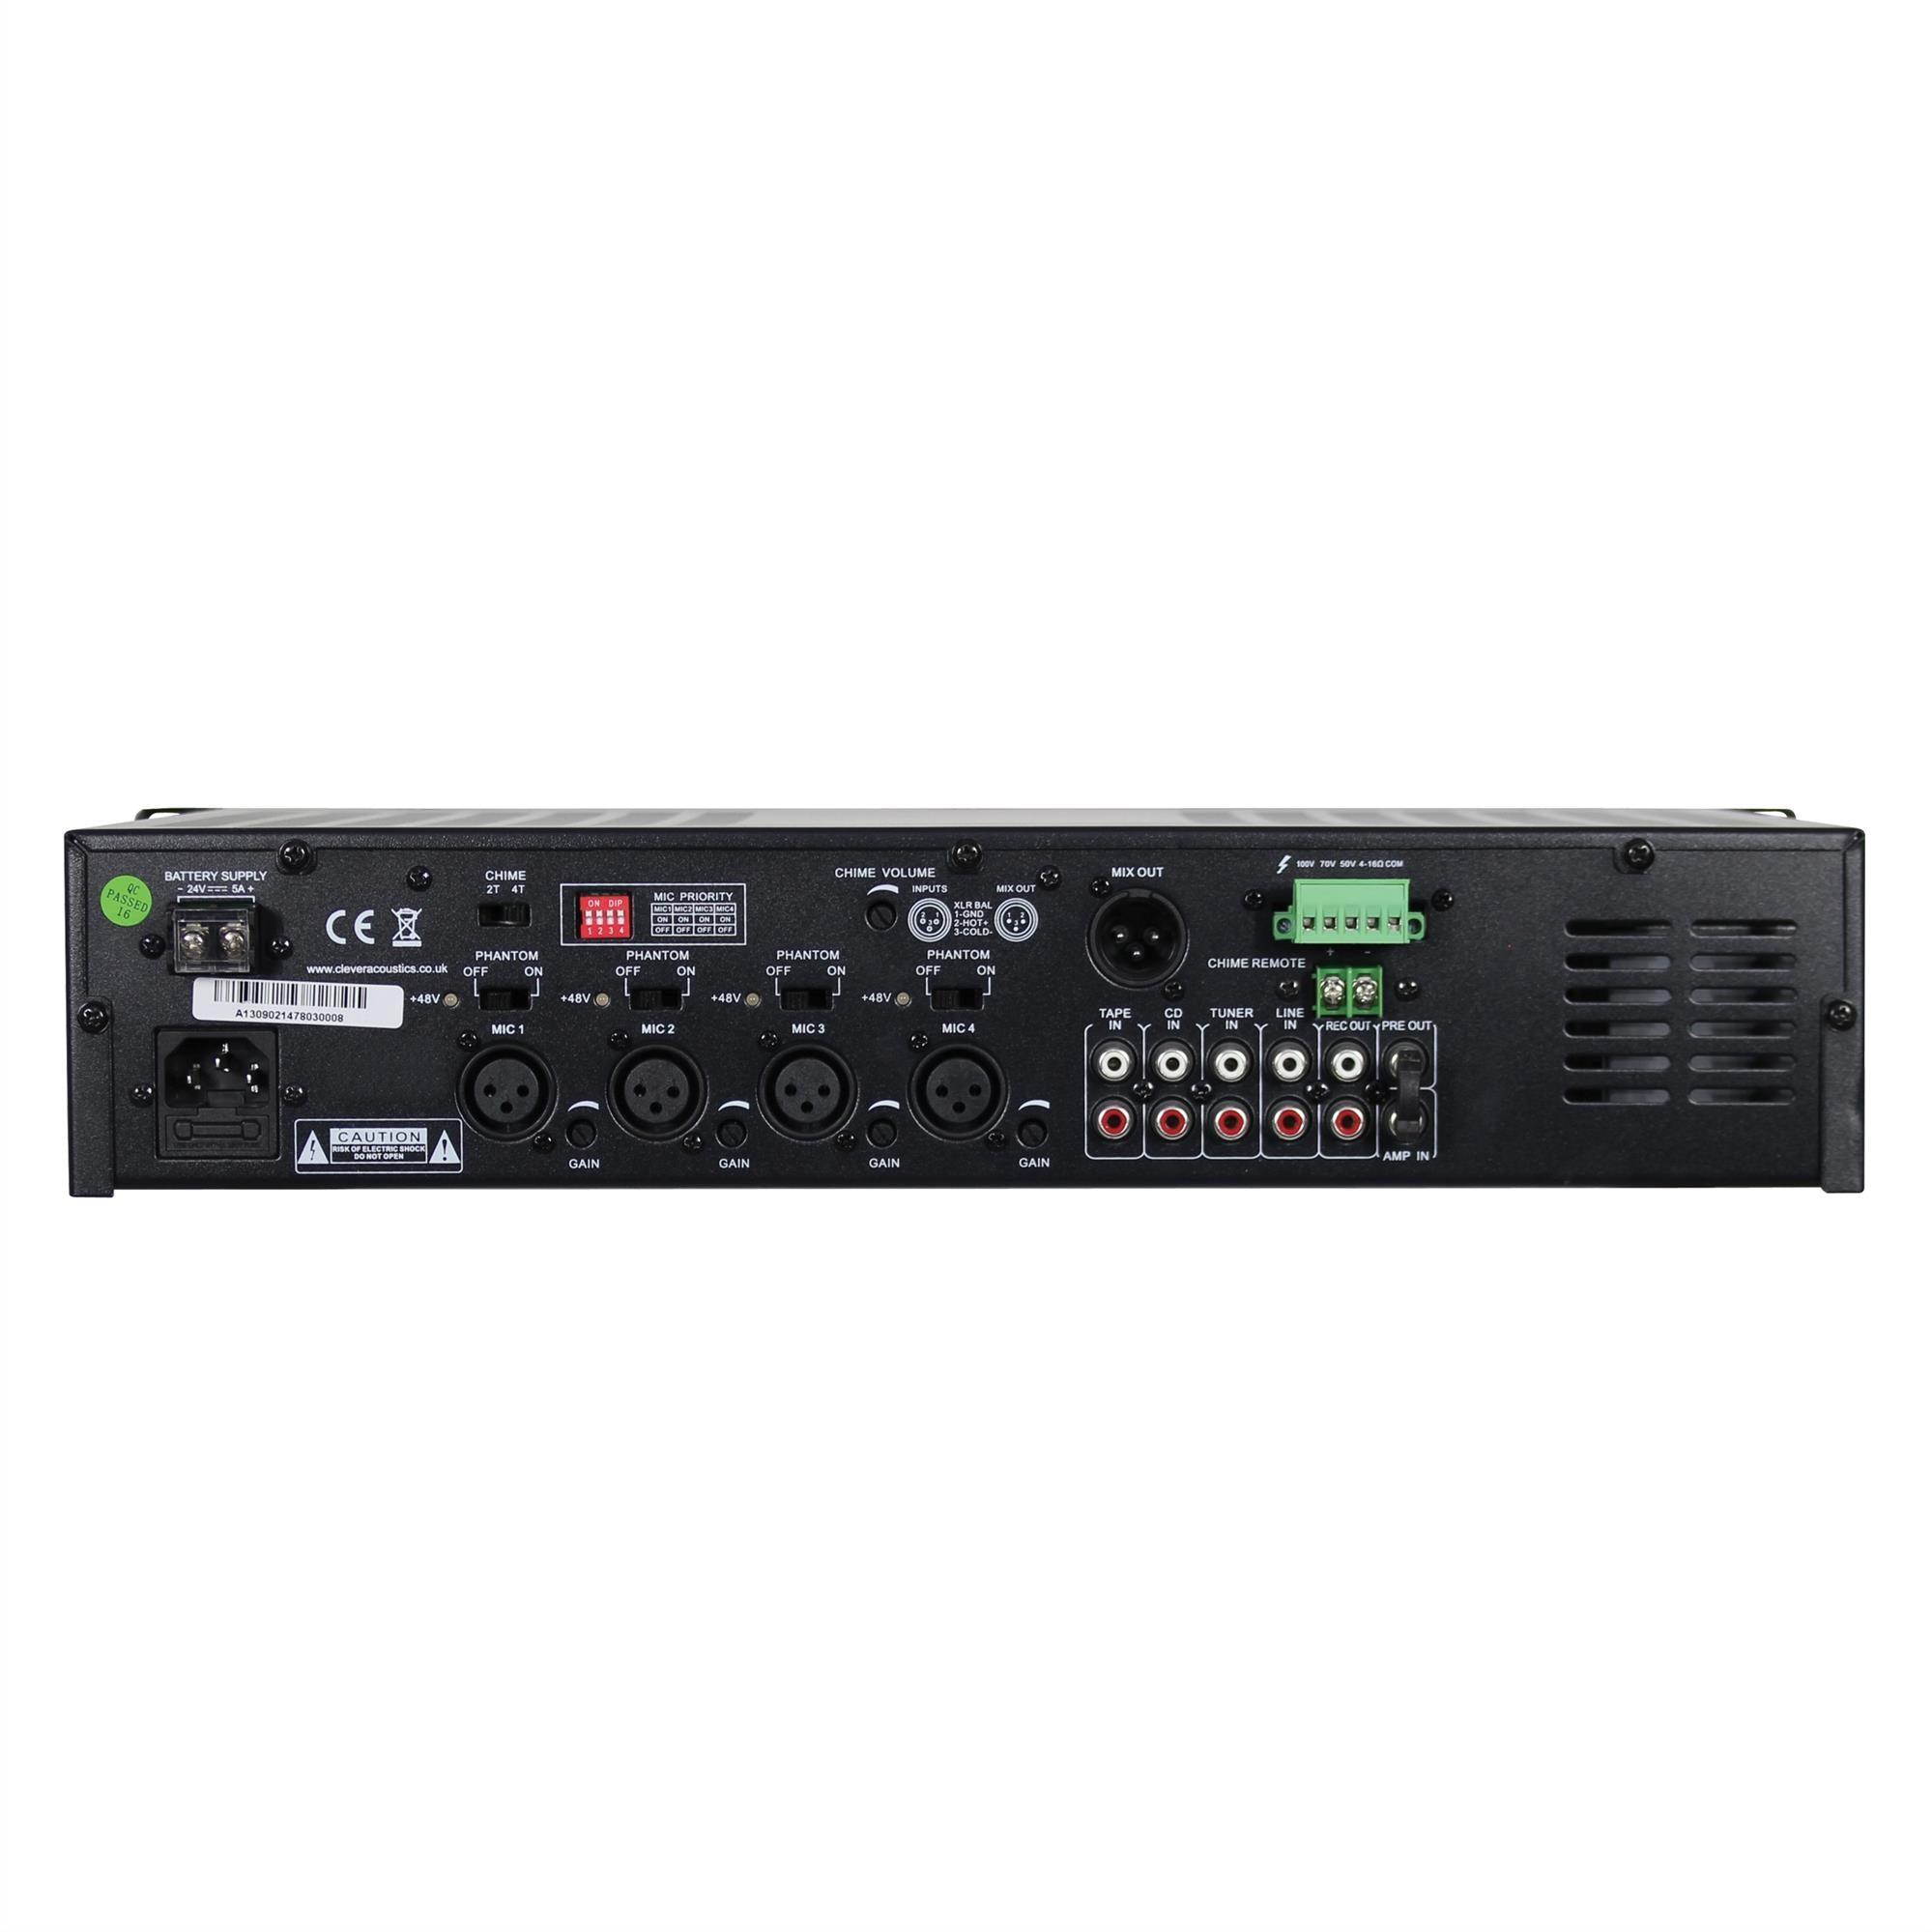 Clever Acoustics MA 3120 100v 120w Mixer Amplifier - DY Pro Audio